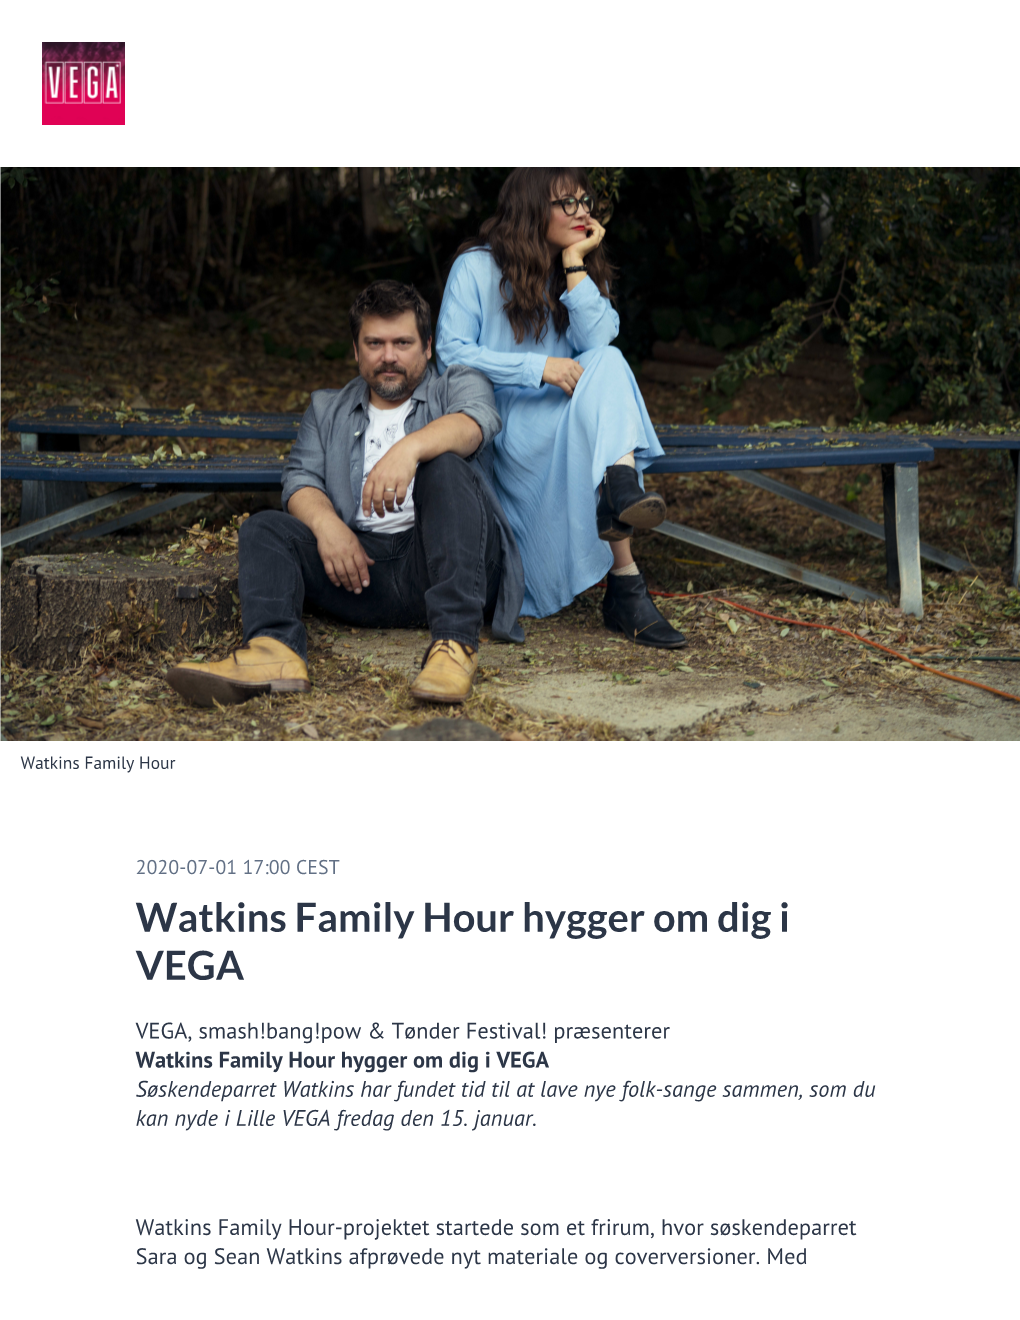 ​Watkins Family Hour Hygger Om Dig I VEGA